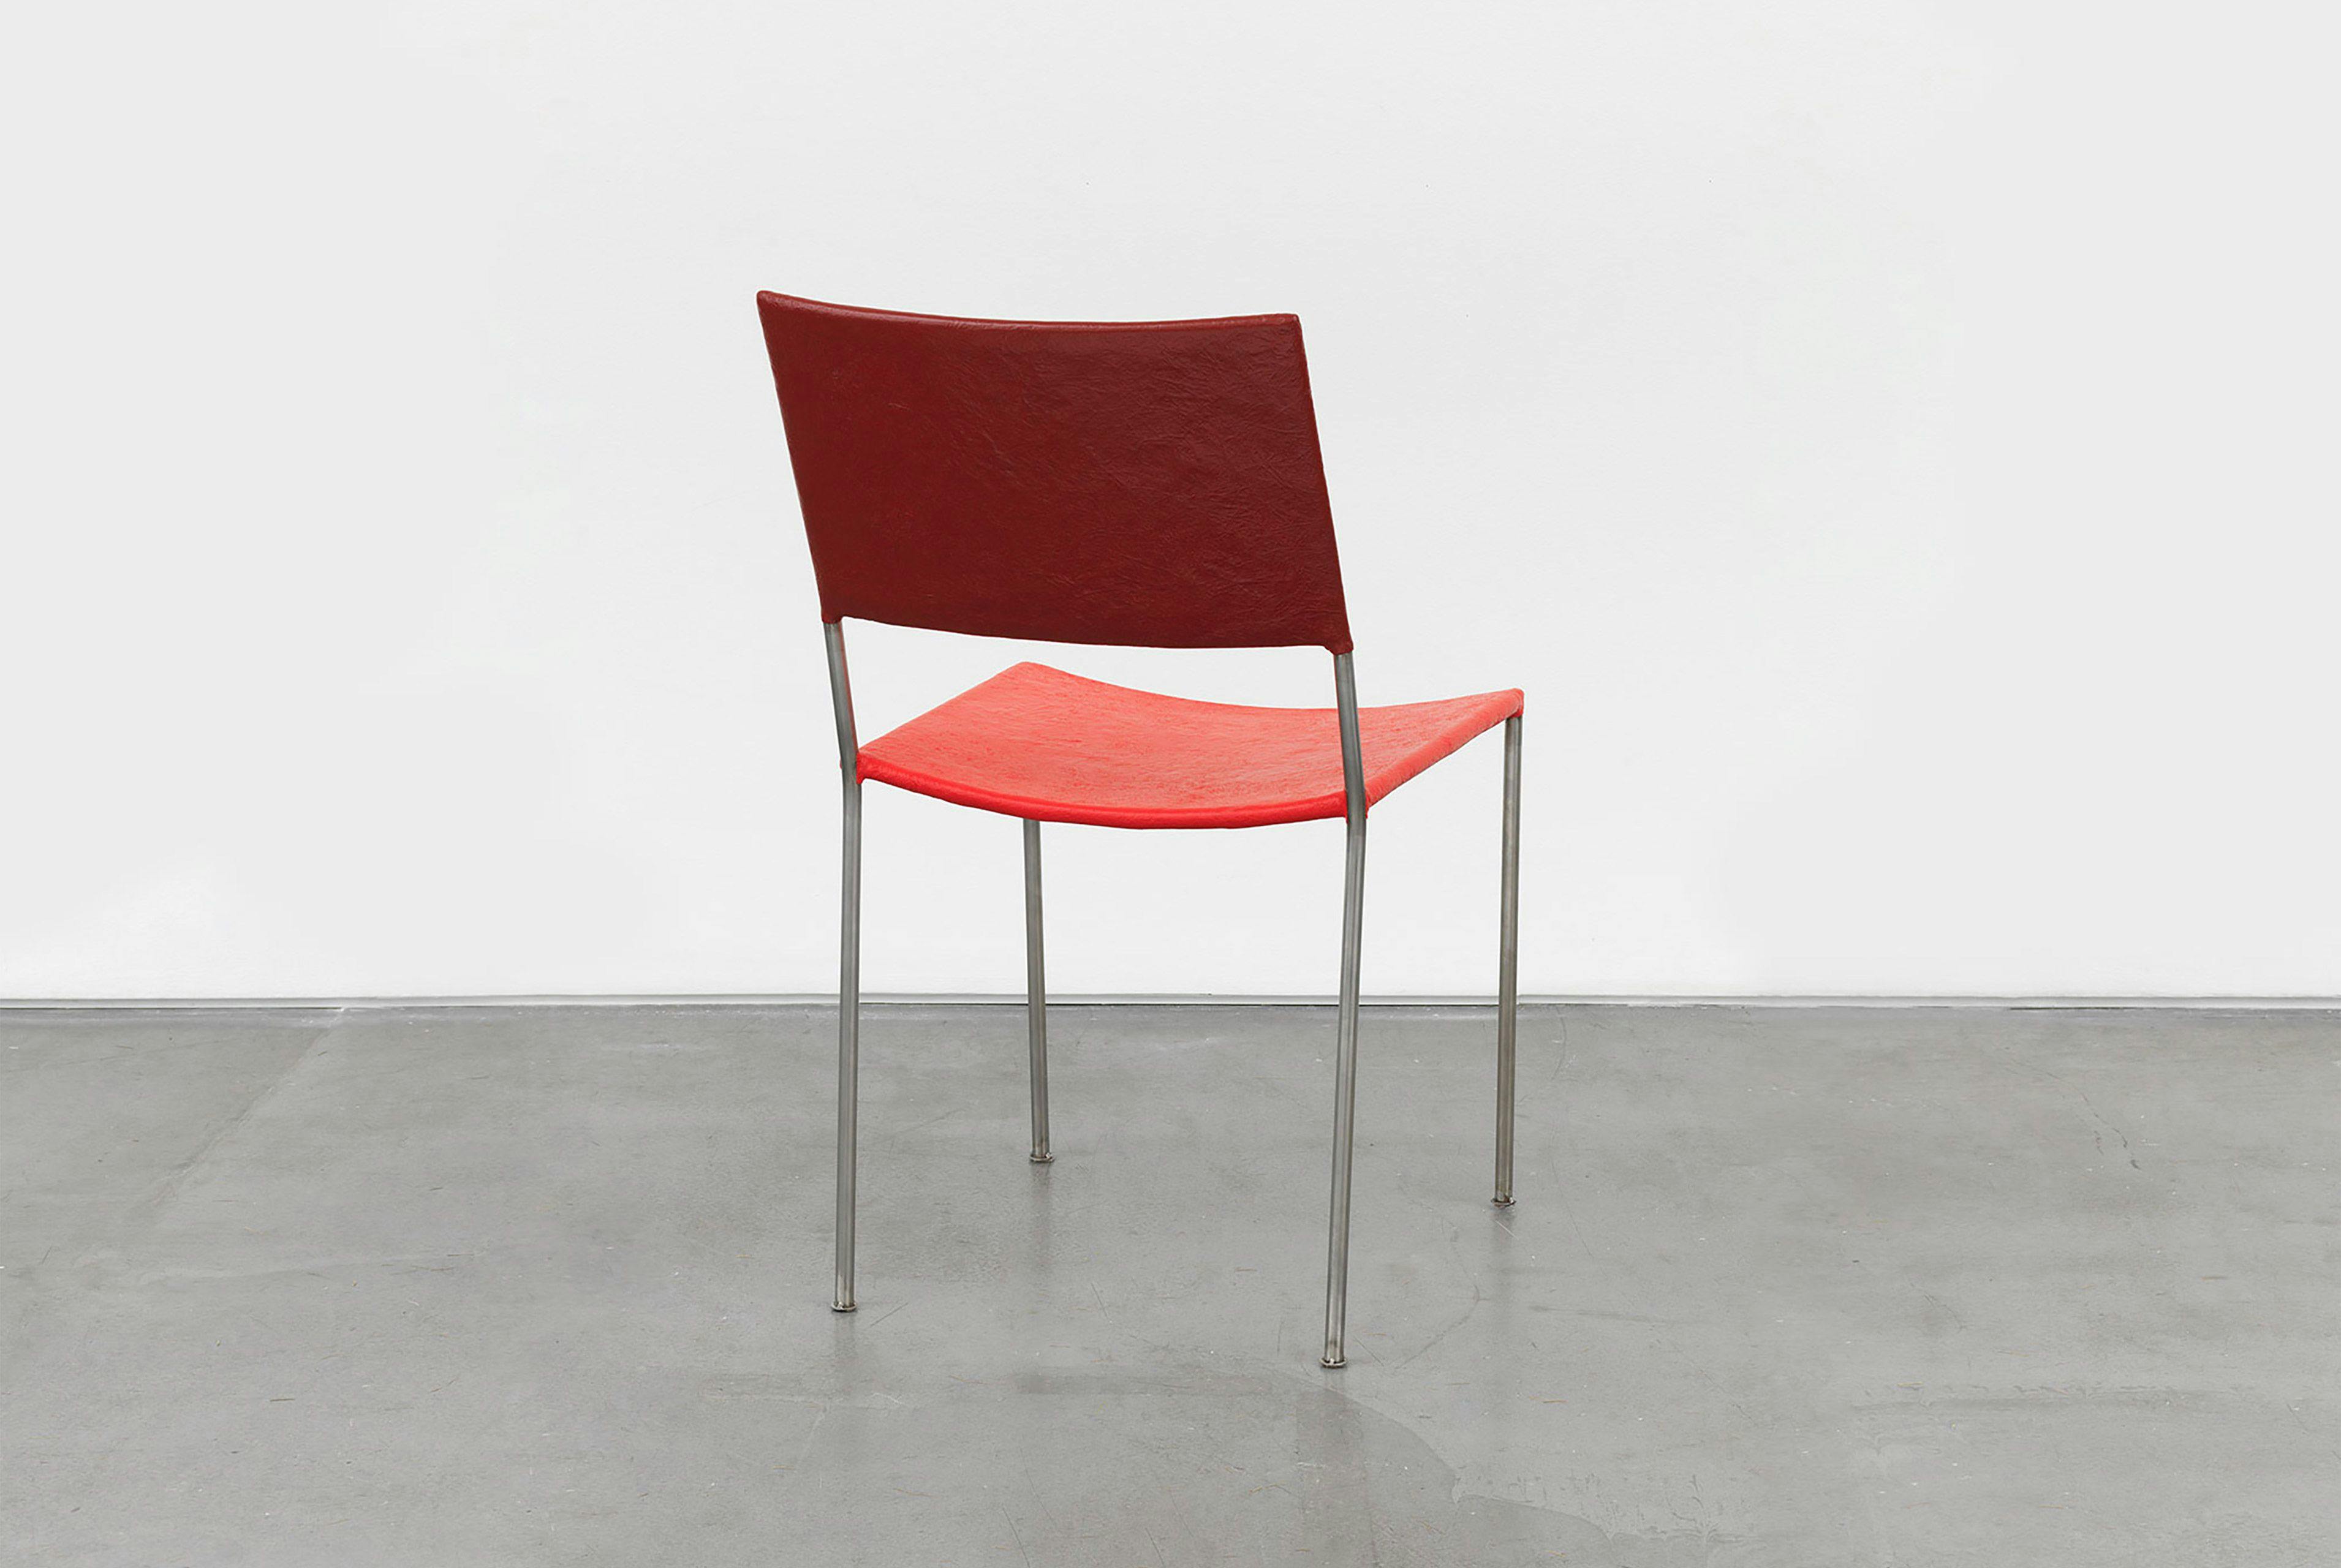 A furniture work by Franz West, titled Künstlerstuhl (Artist's Chair), dated 2006/2015	